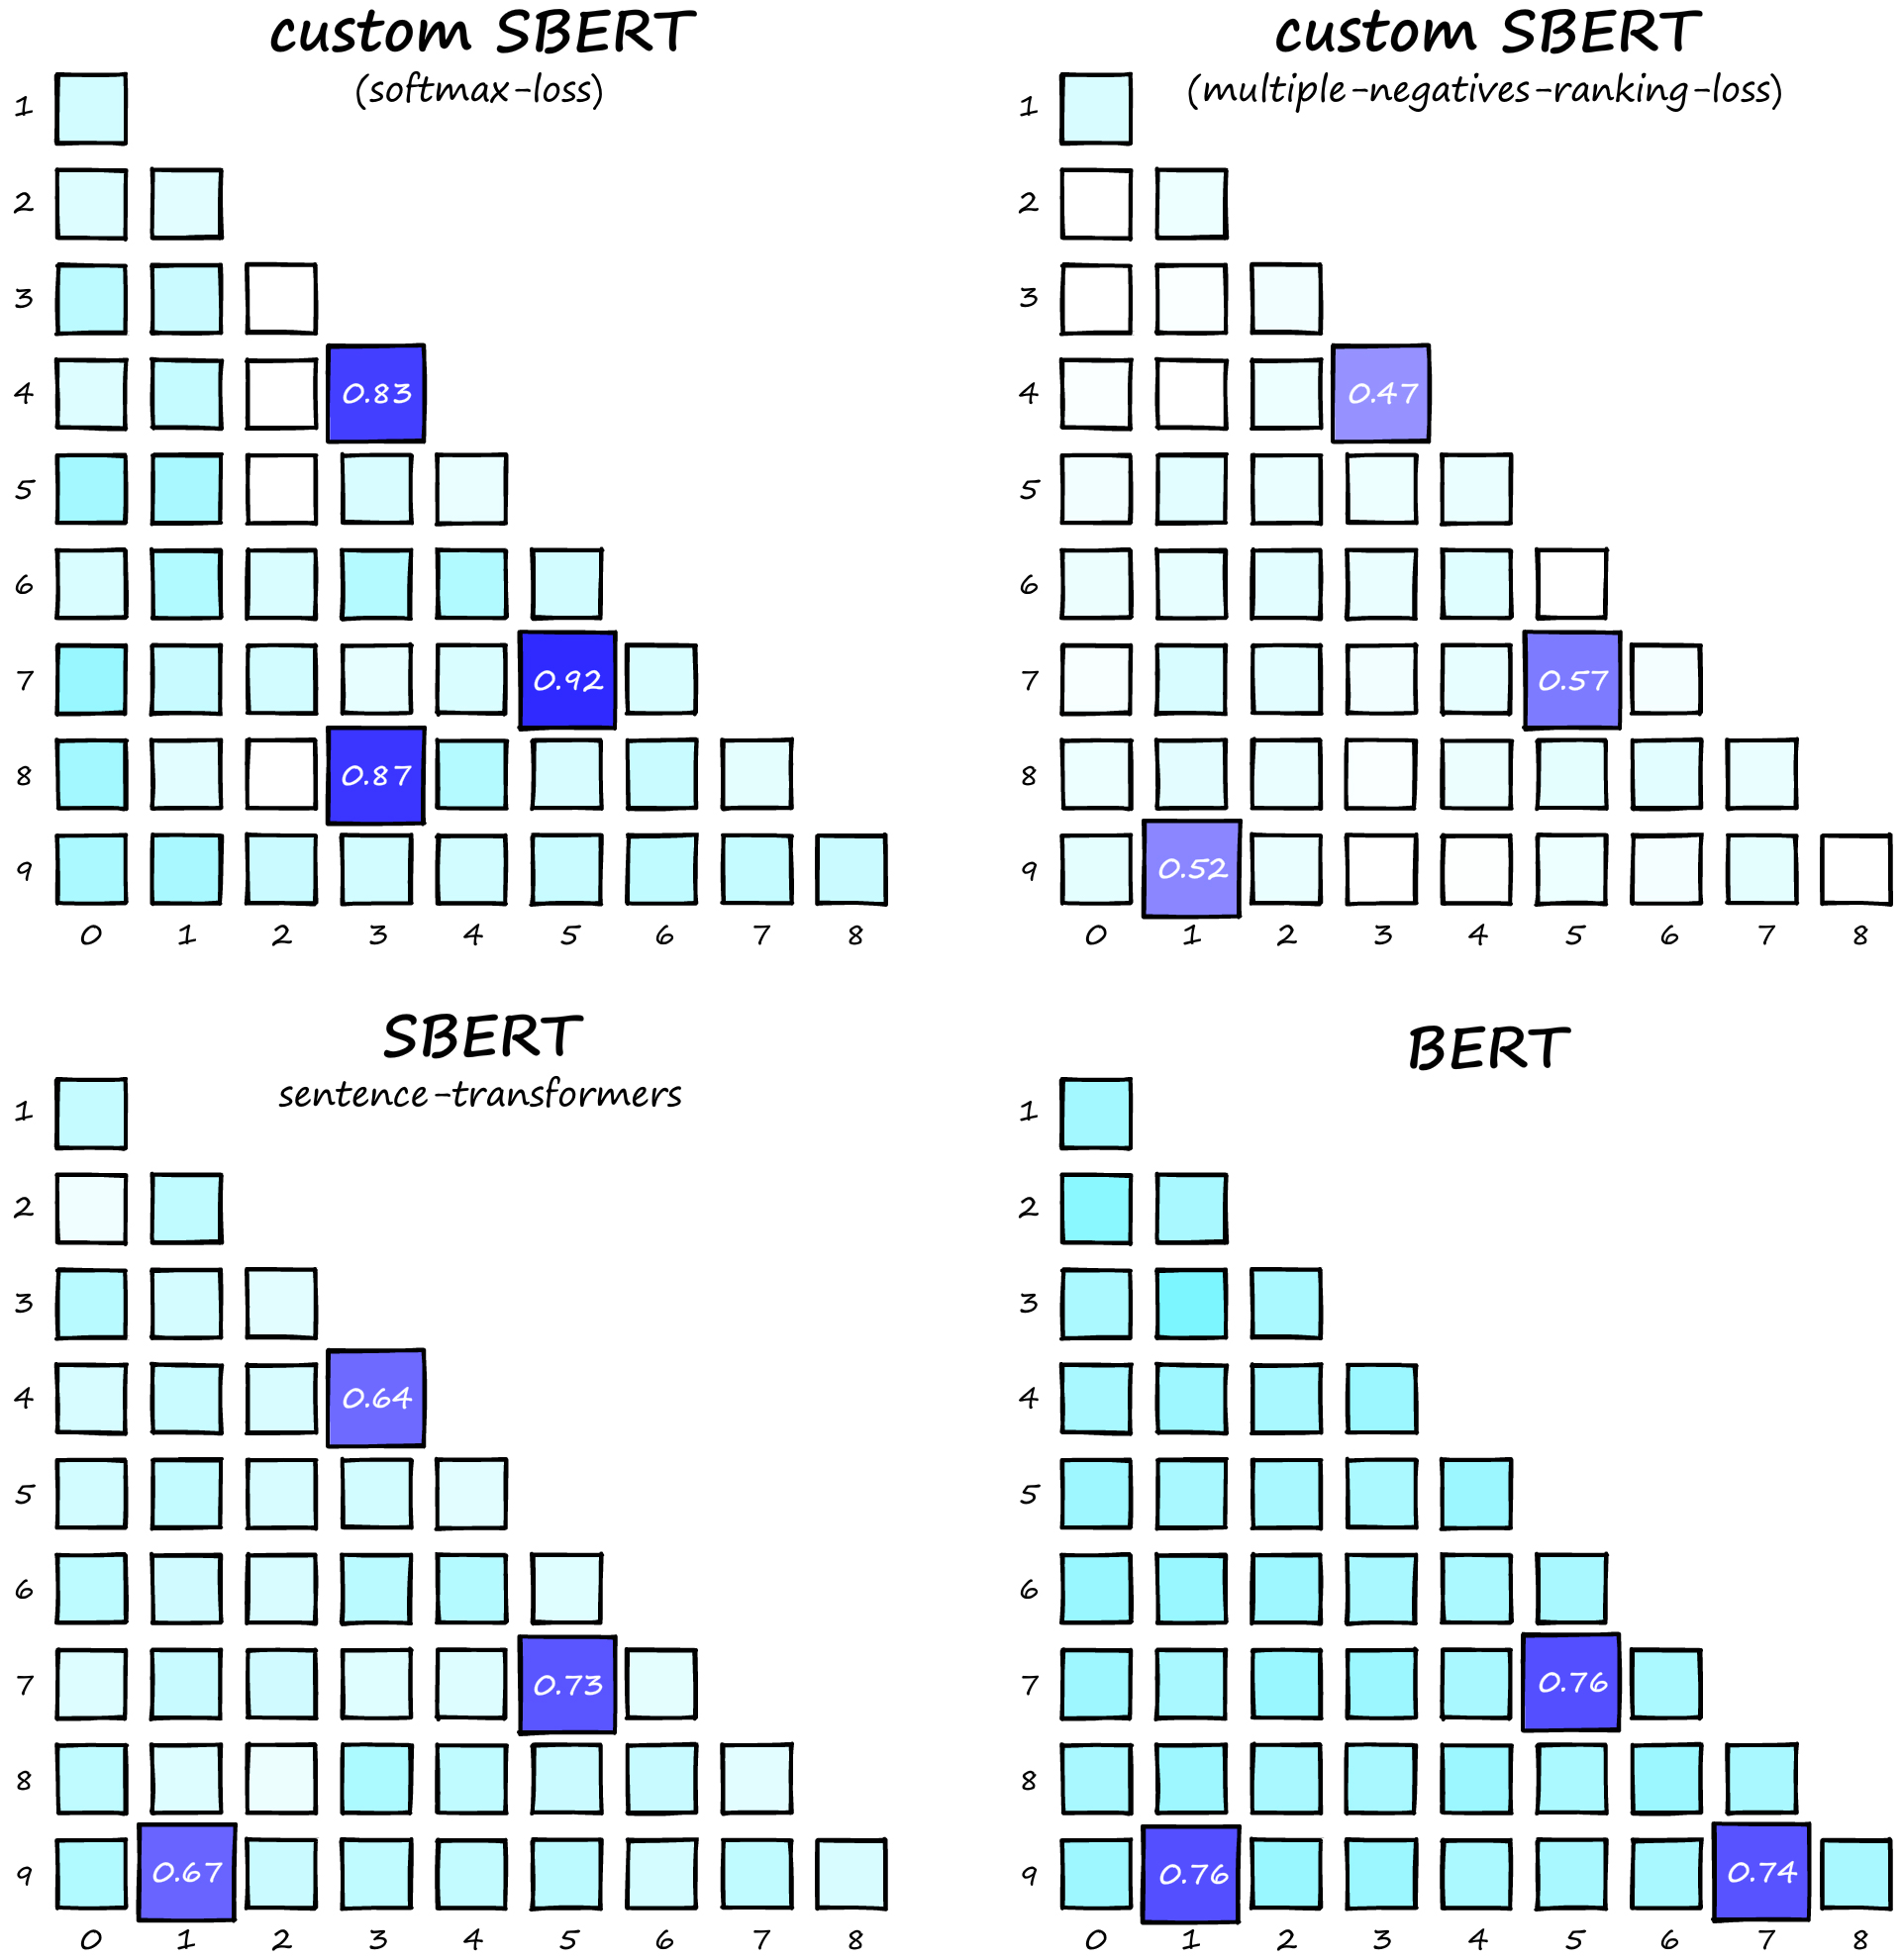 Similarity score heatmaps for four BERT/SBERT models.